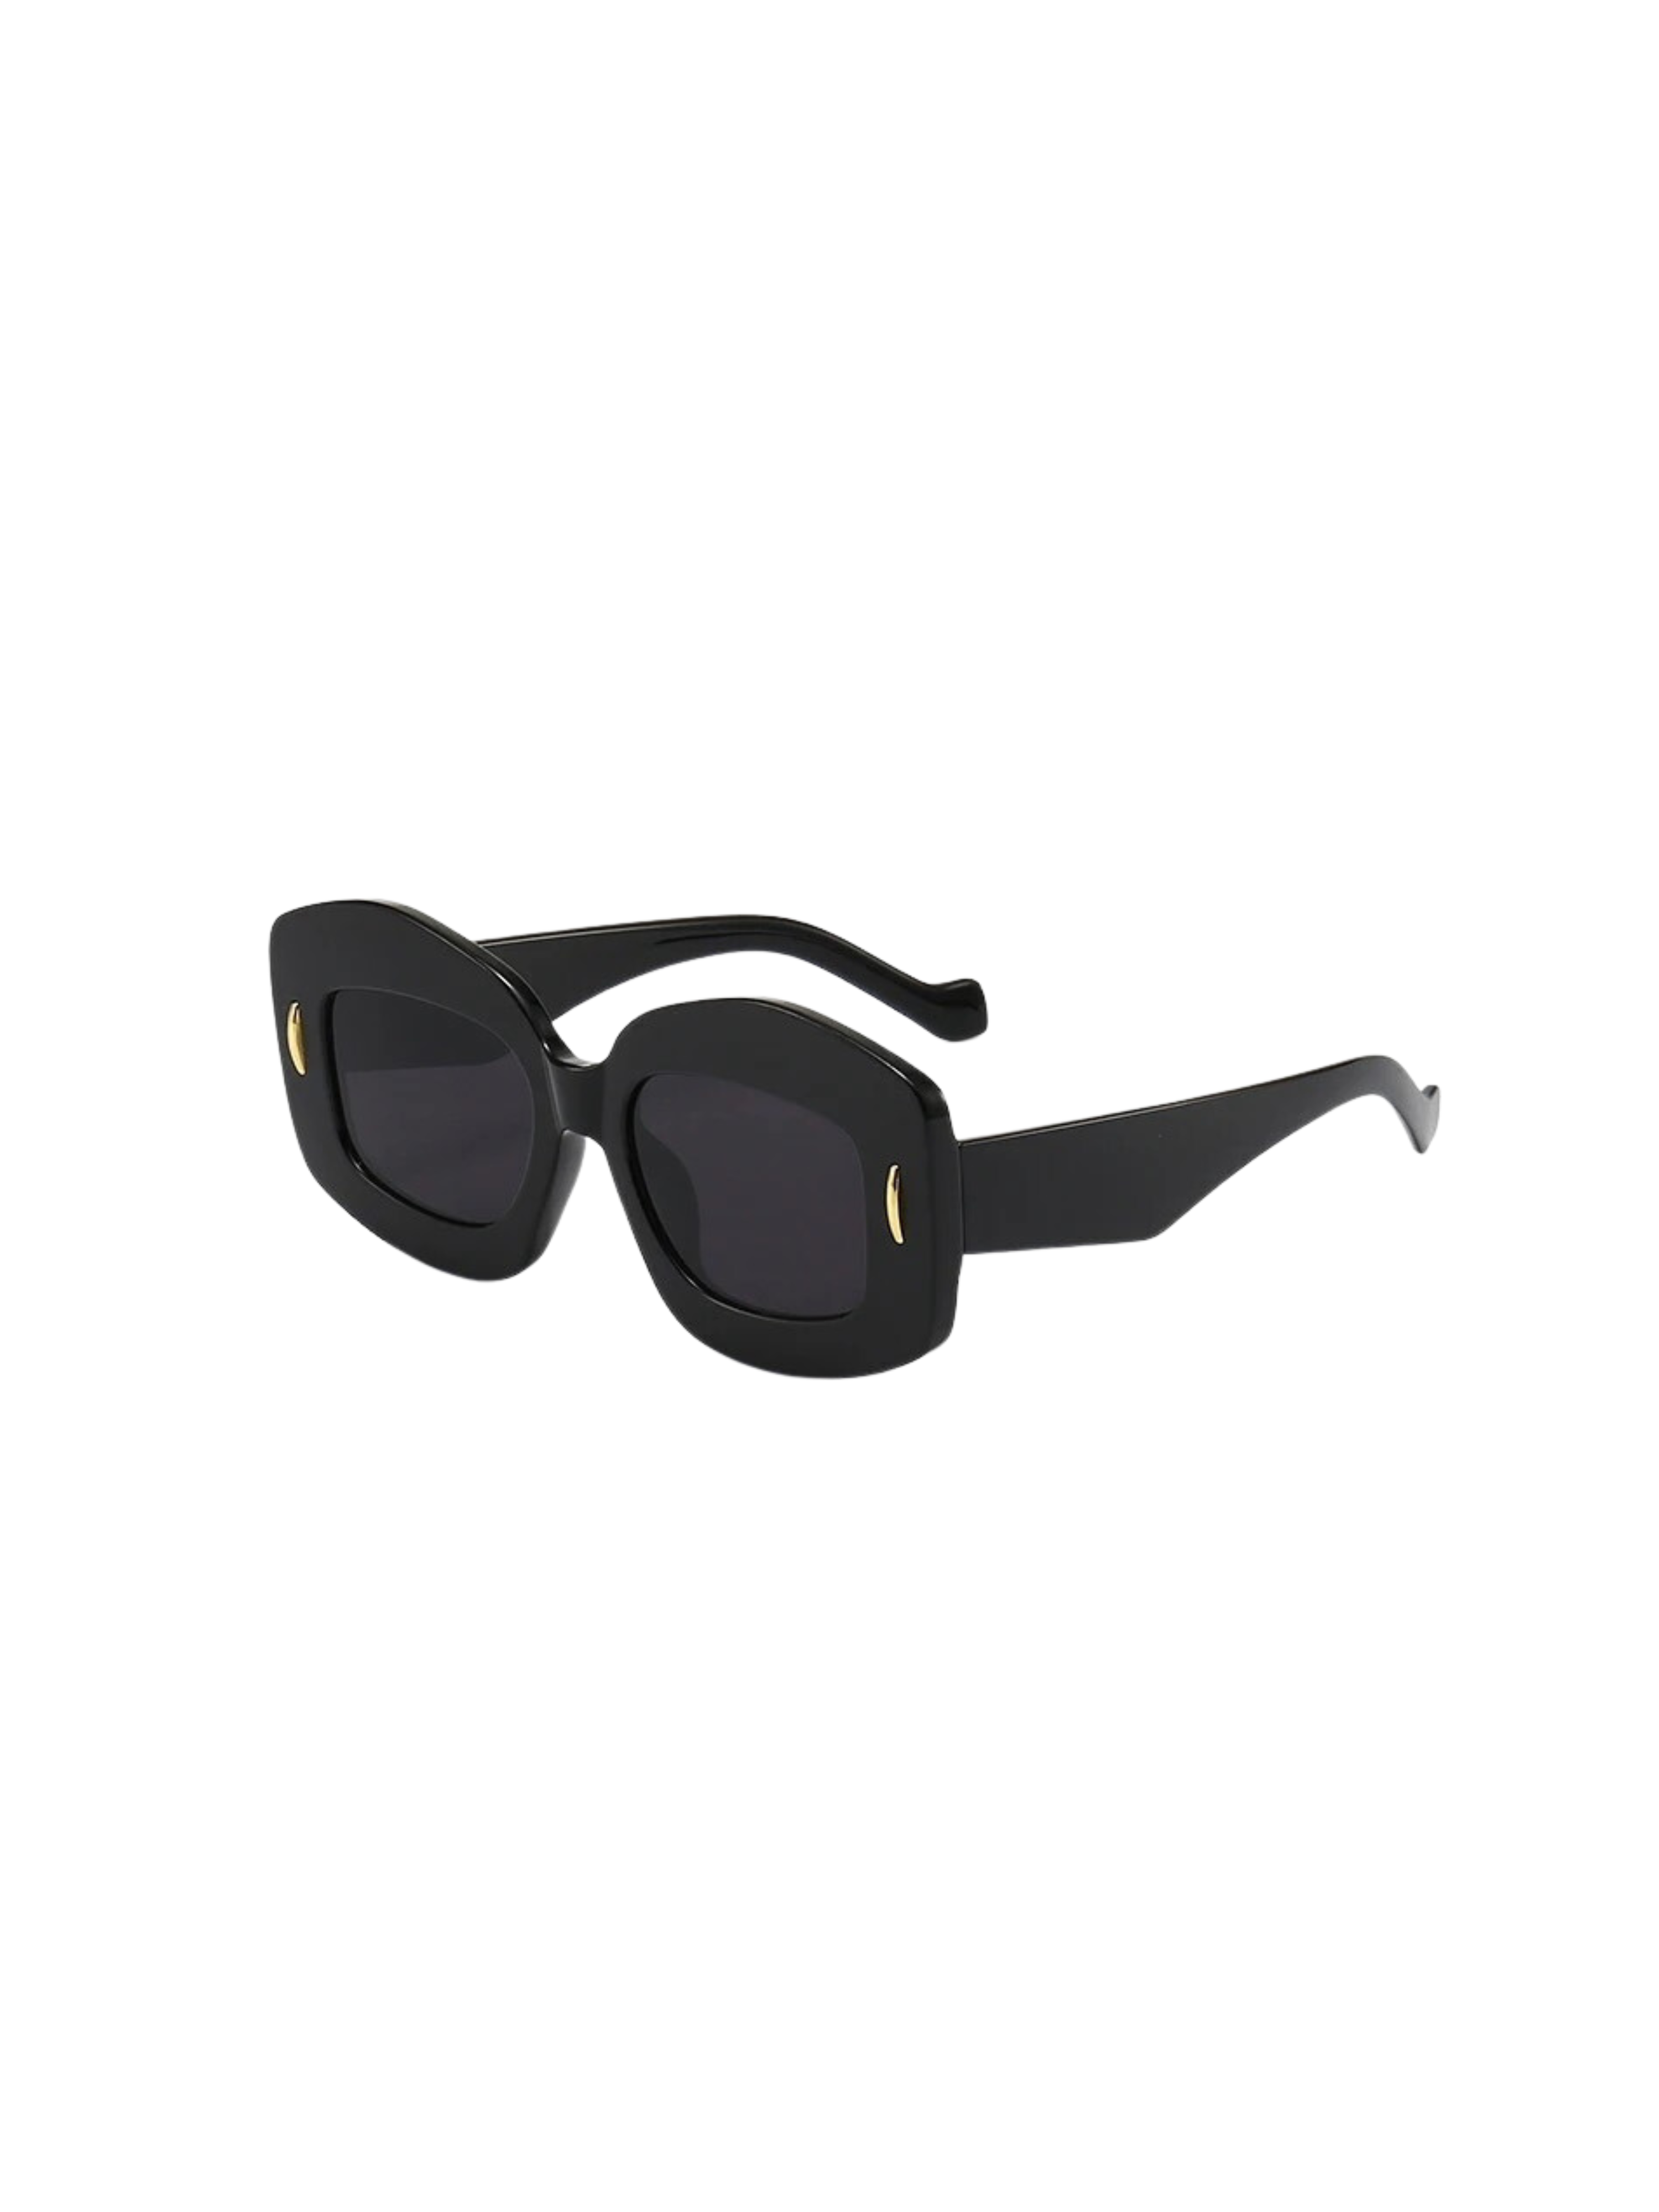 GOLDxTEAL stylish black sunglasses.